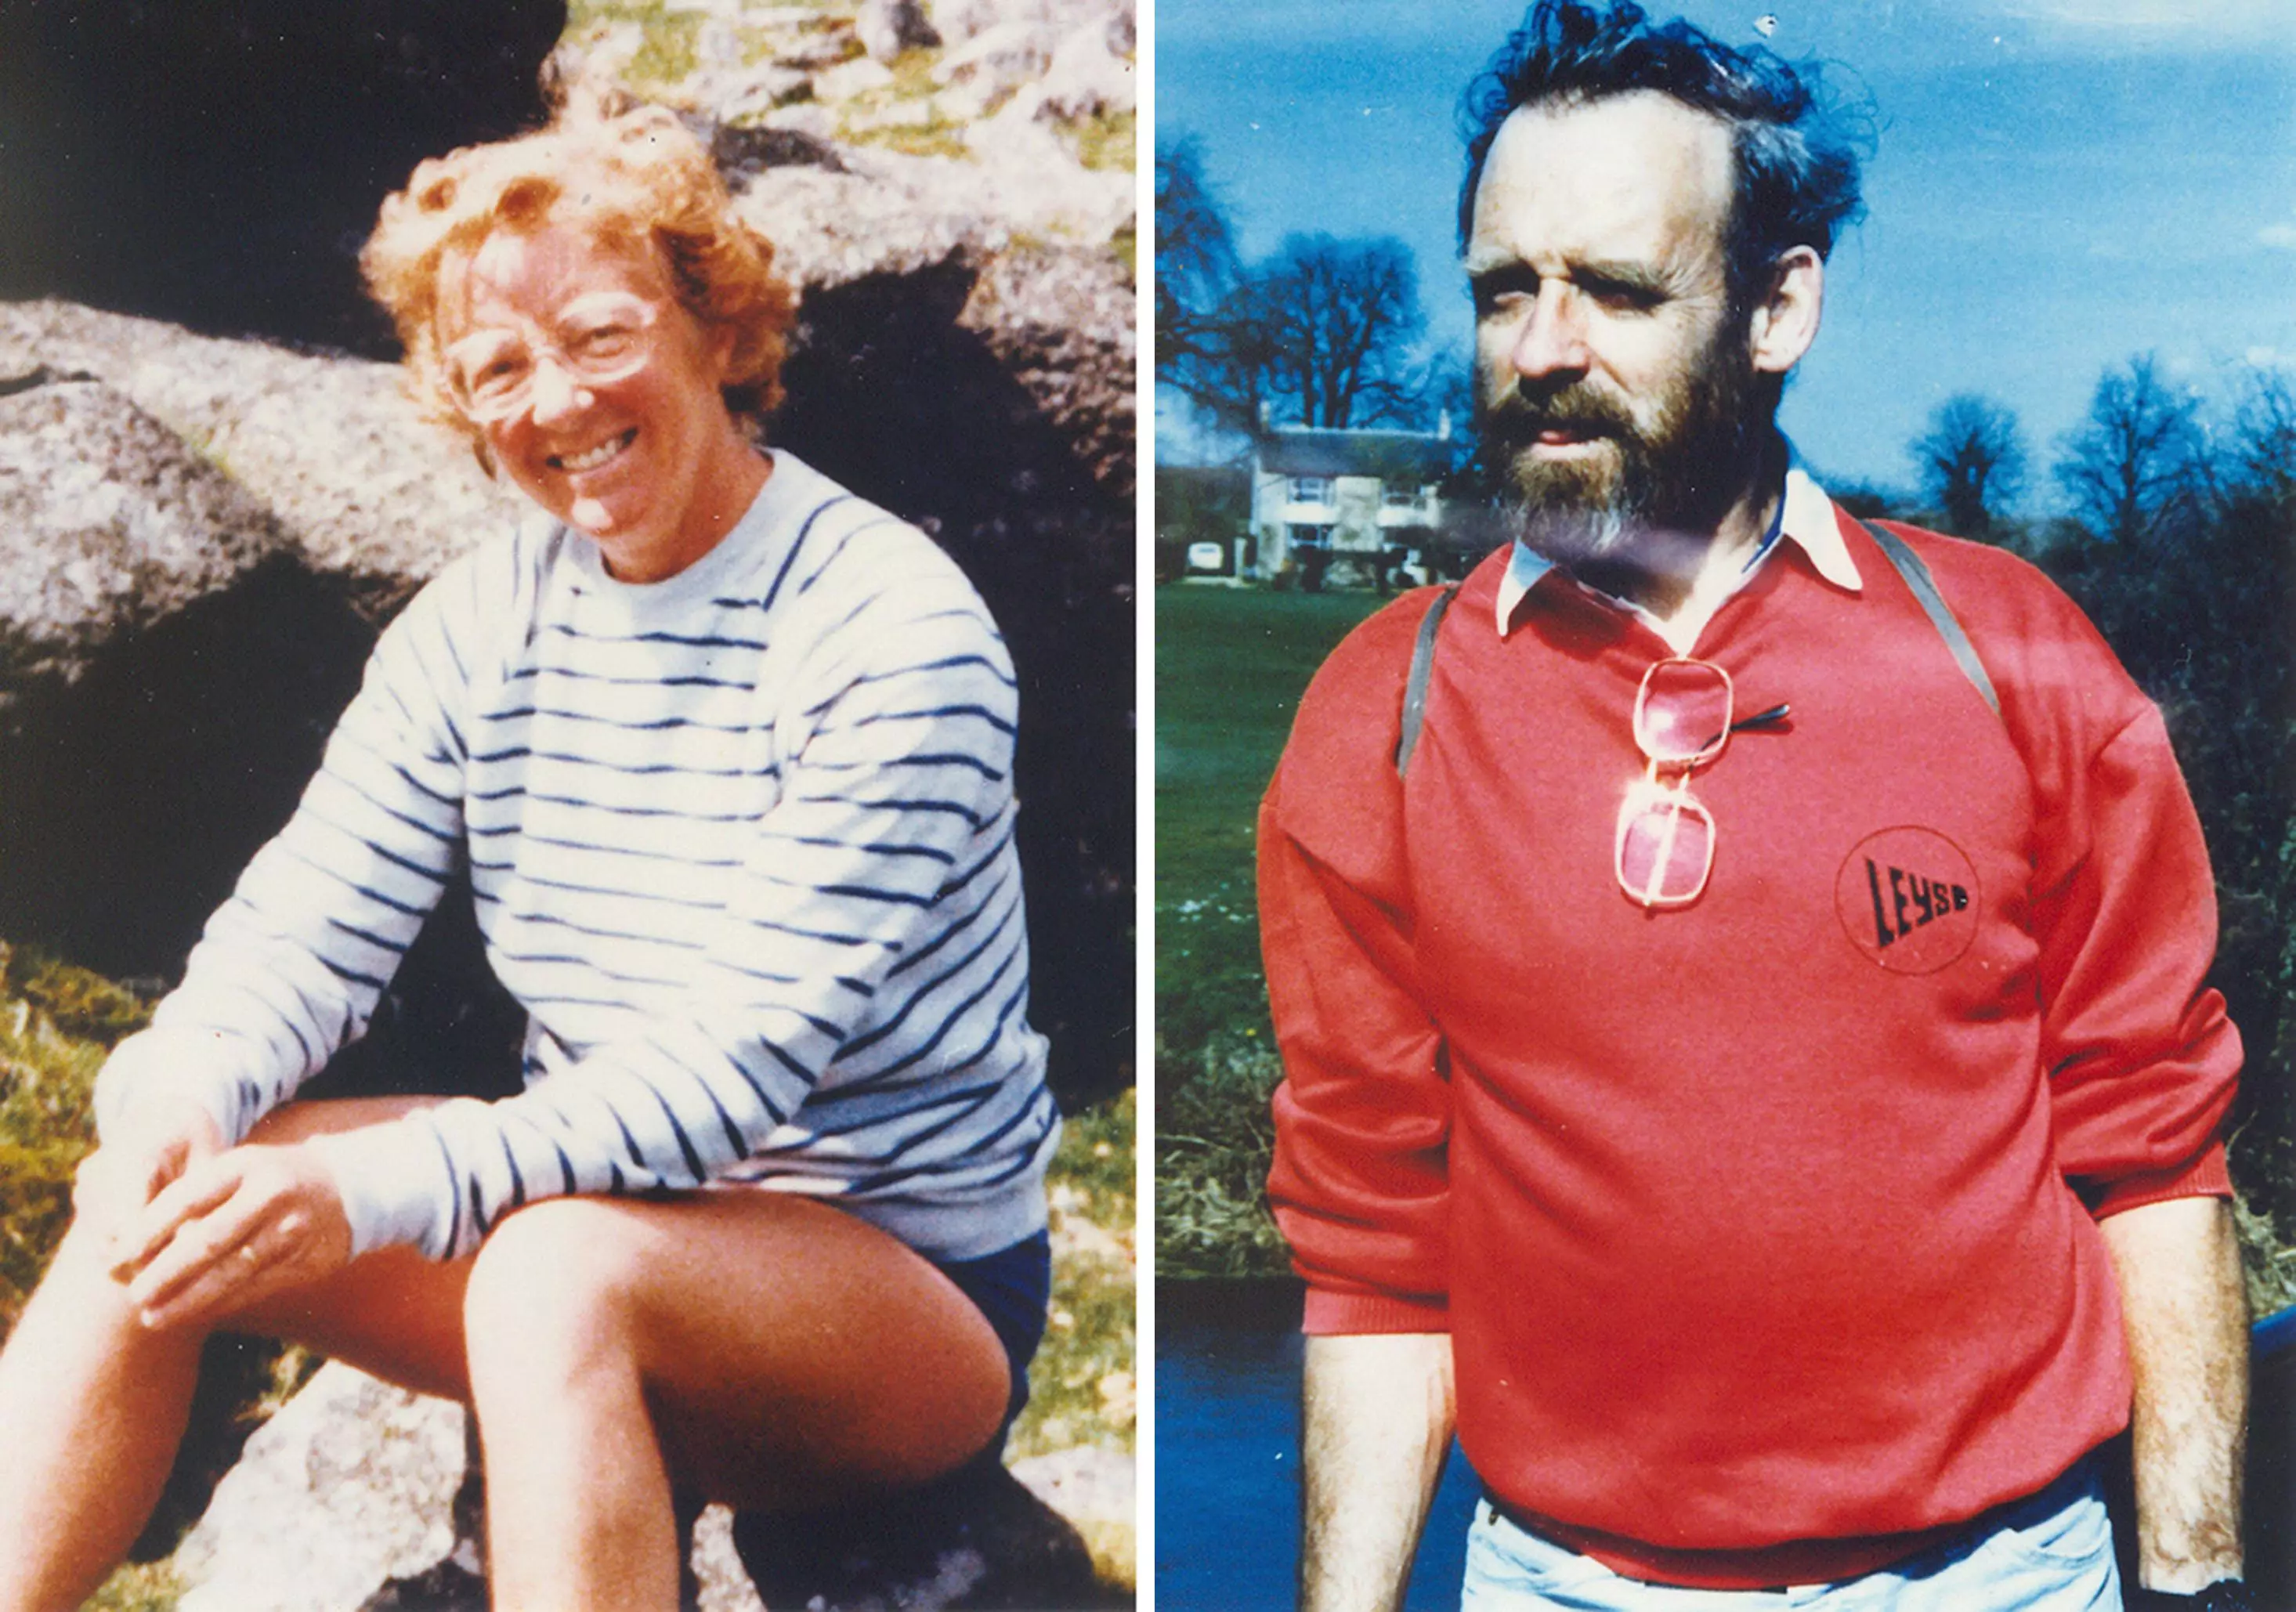 Peter and Gwenda Dixon were murdered in 1989.